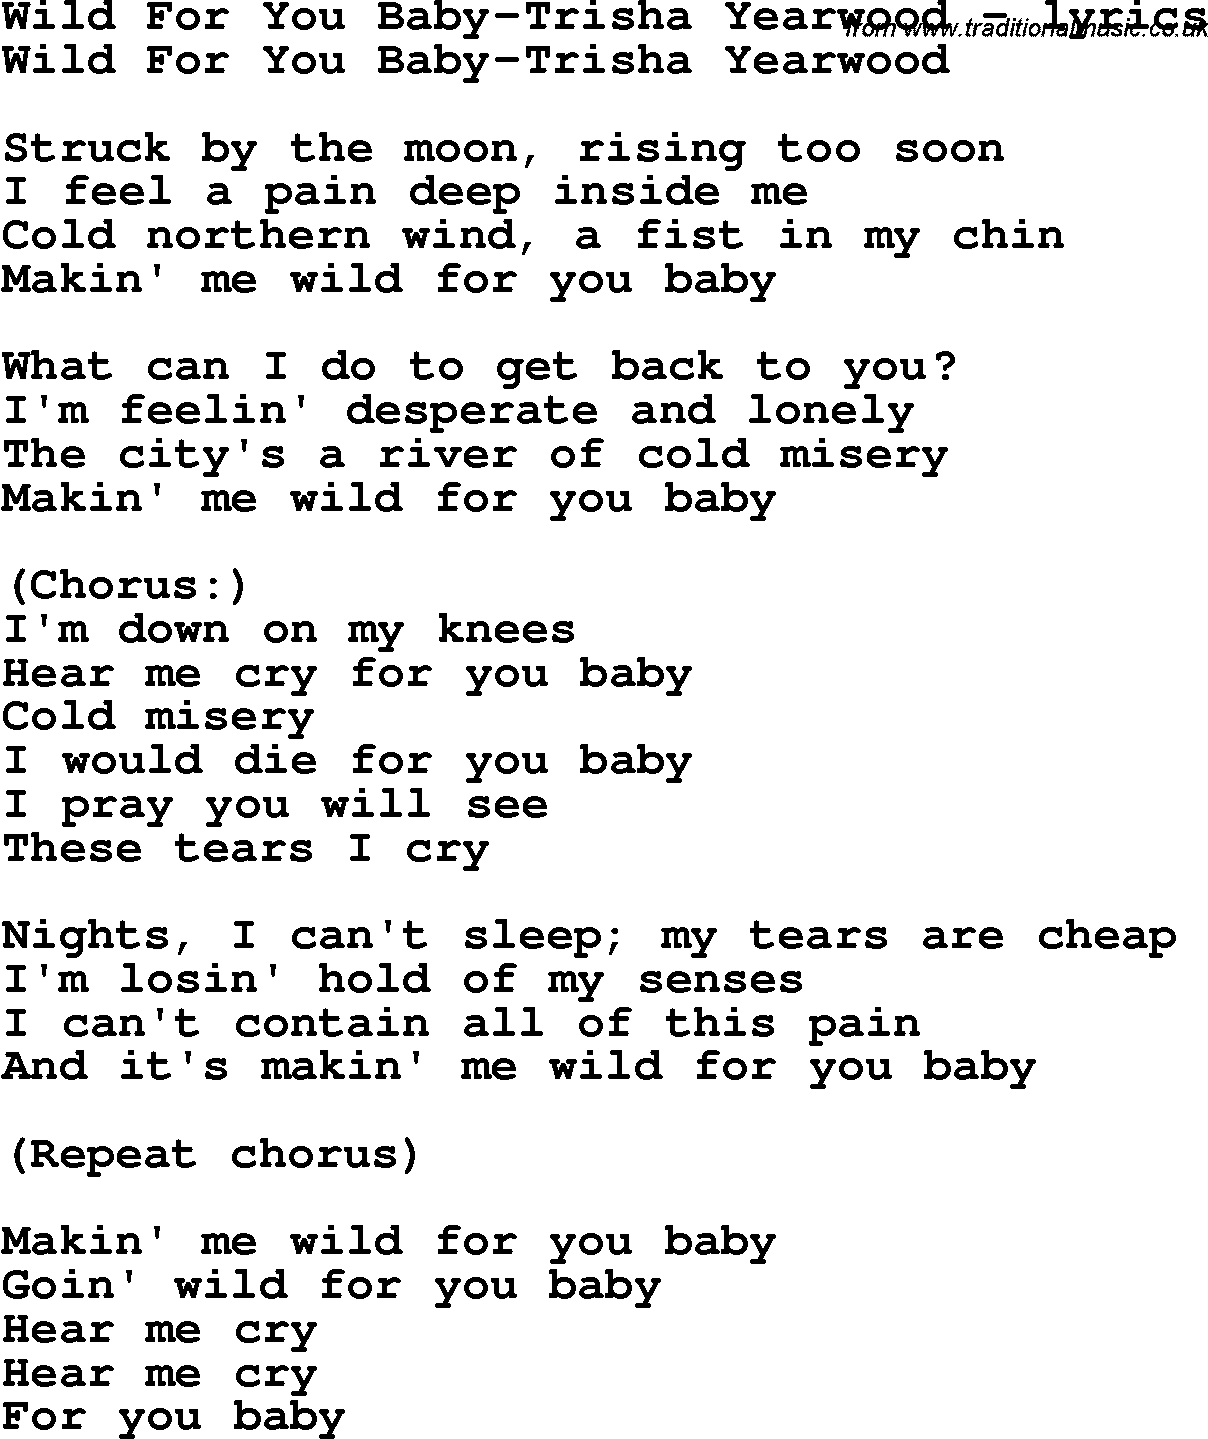 Love Song Lyrics for: Wild For You Baby-Trisha Yearwood